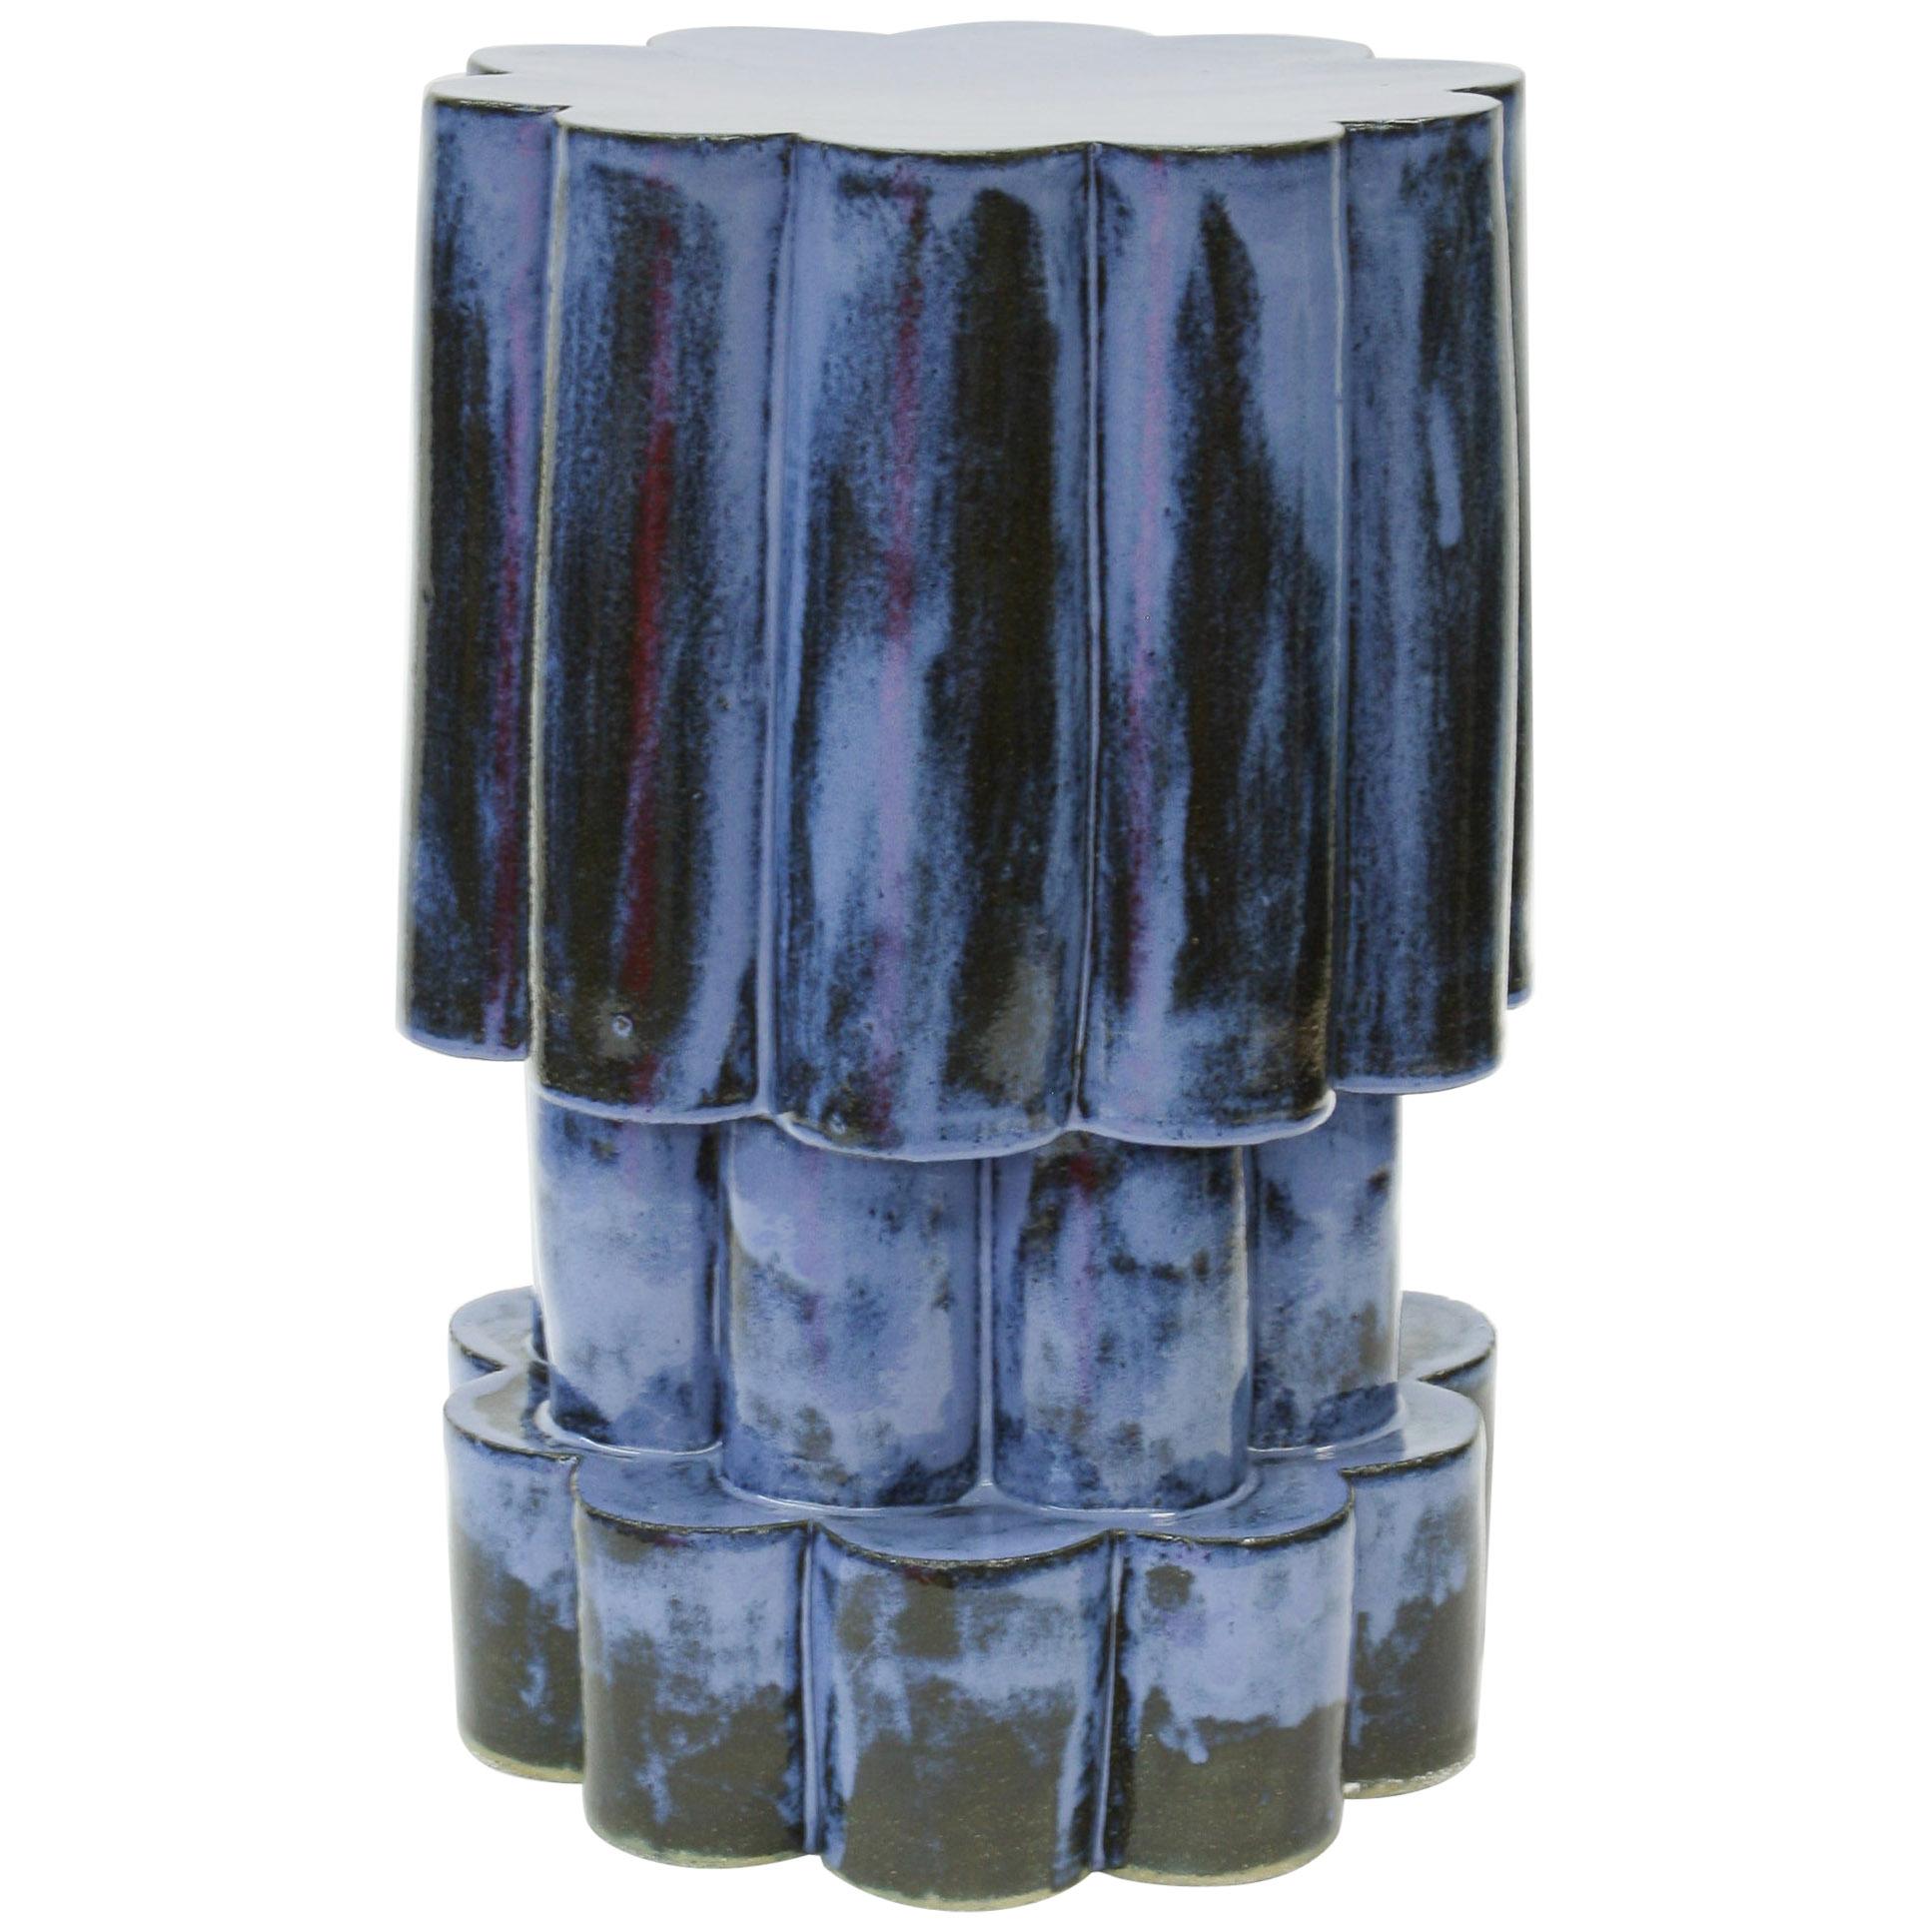 Three-Tier Ceramic Cloud Side Table & Stool in Mottled Blue by BZIPPY